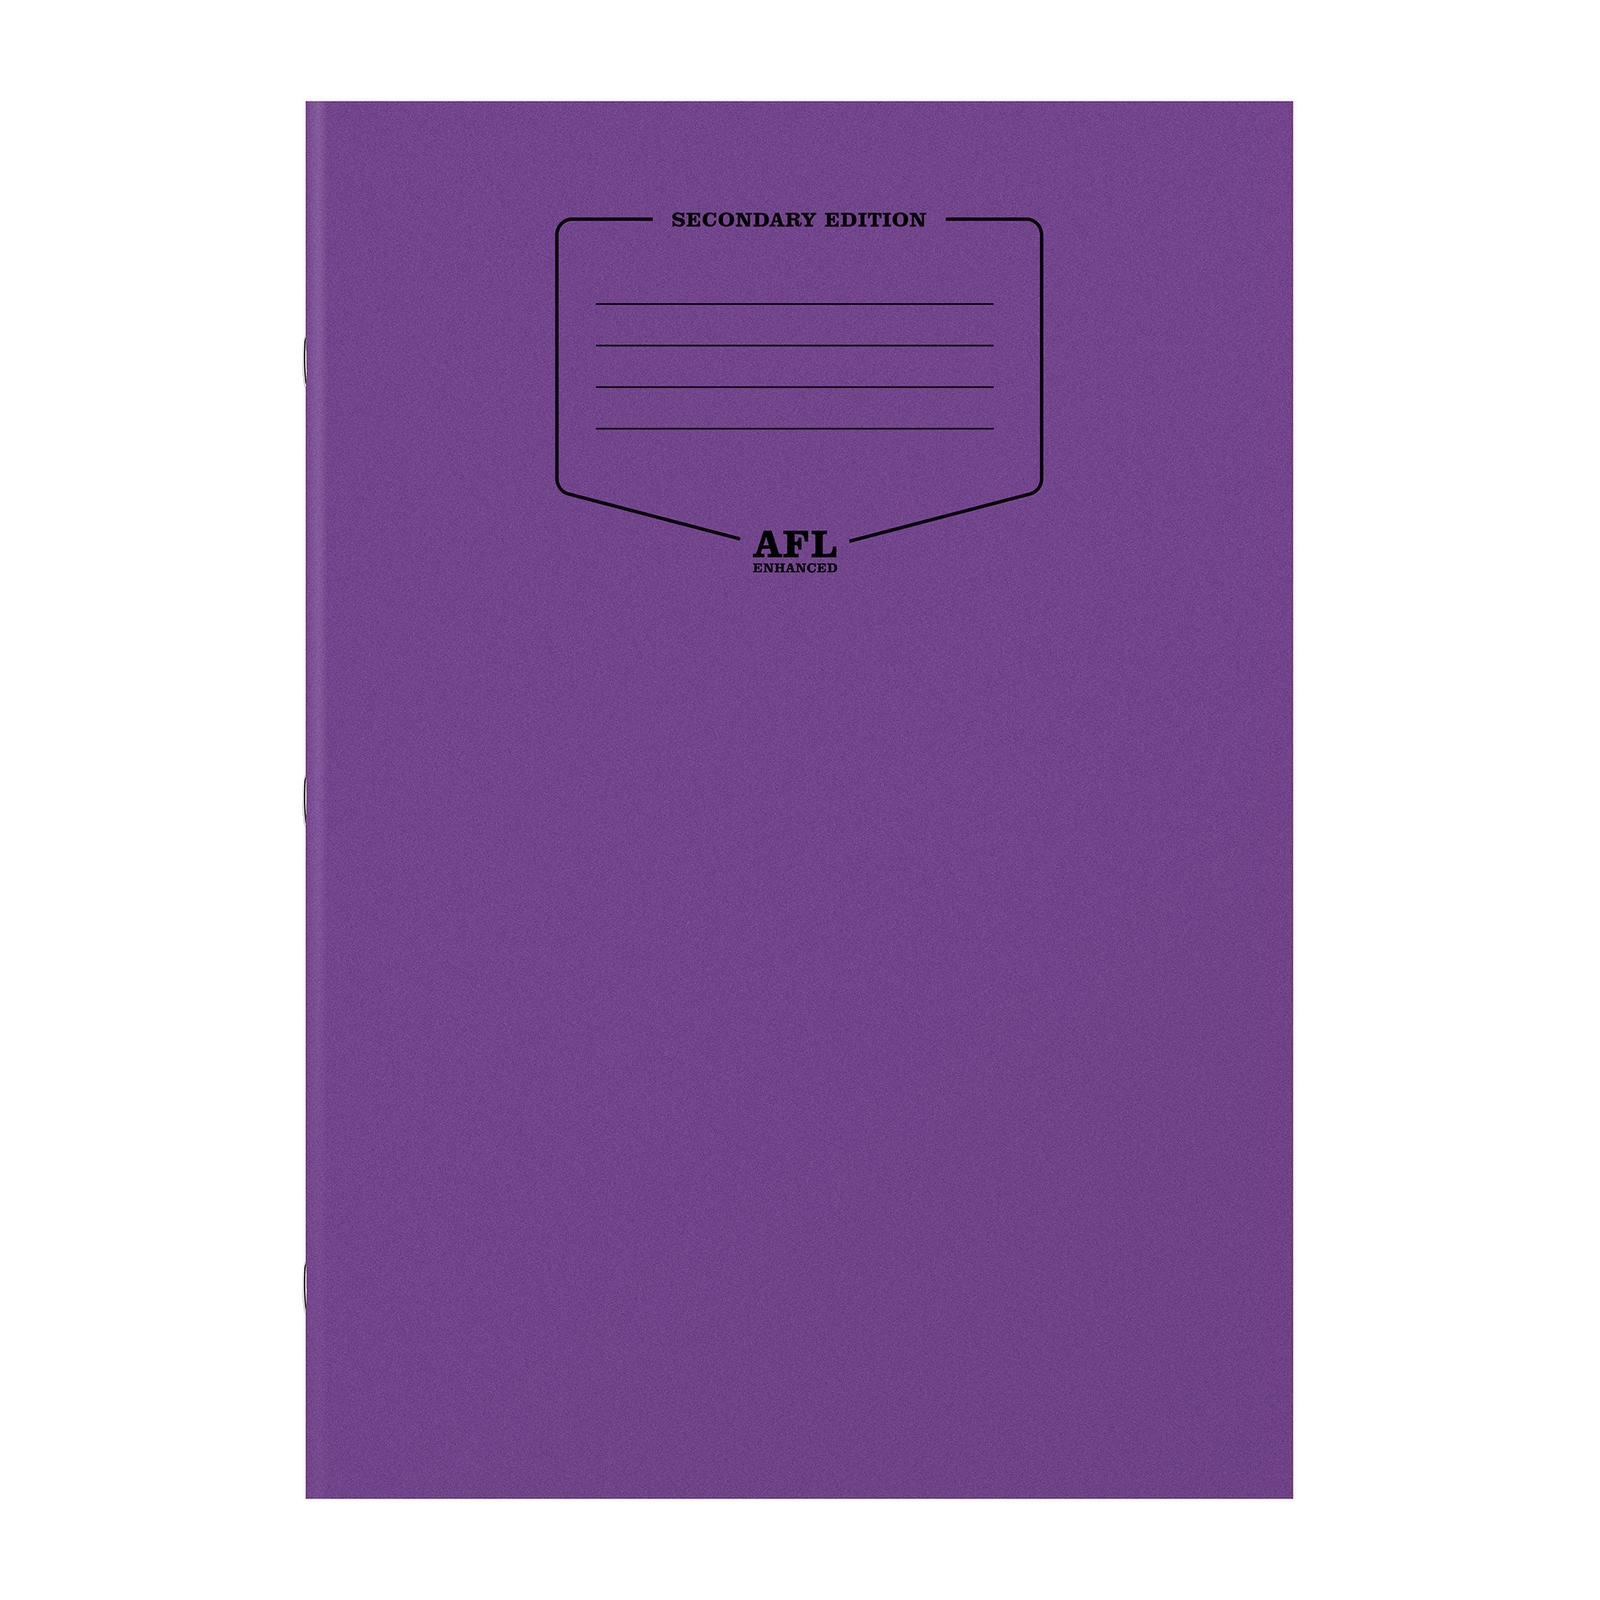 A4 AFL Enhanced Exercise Books  - Purple